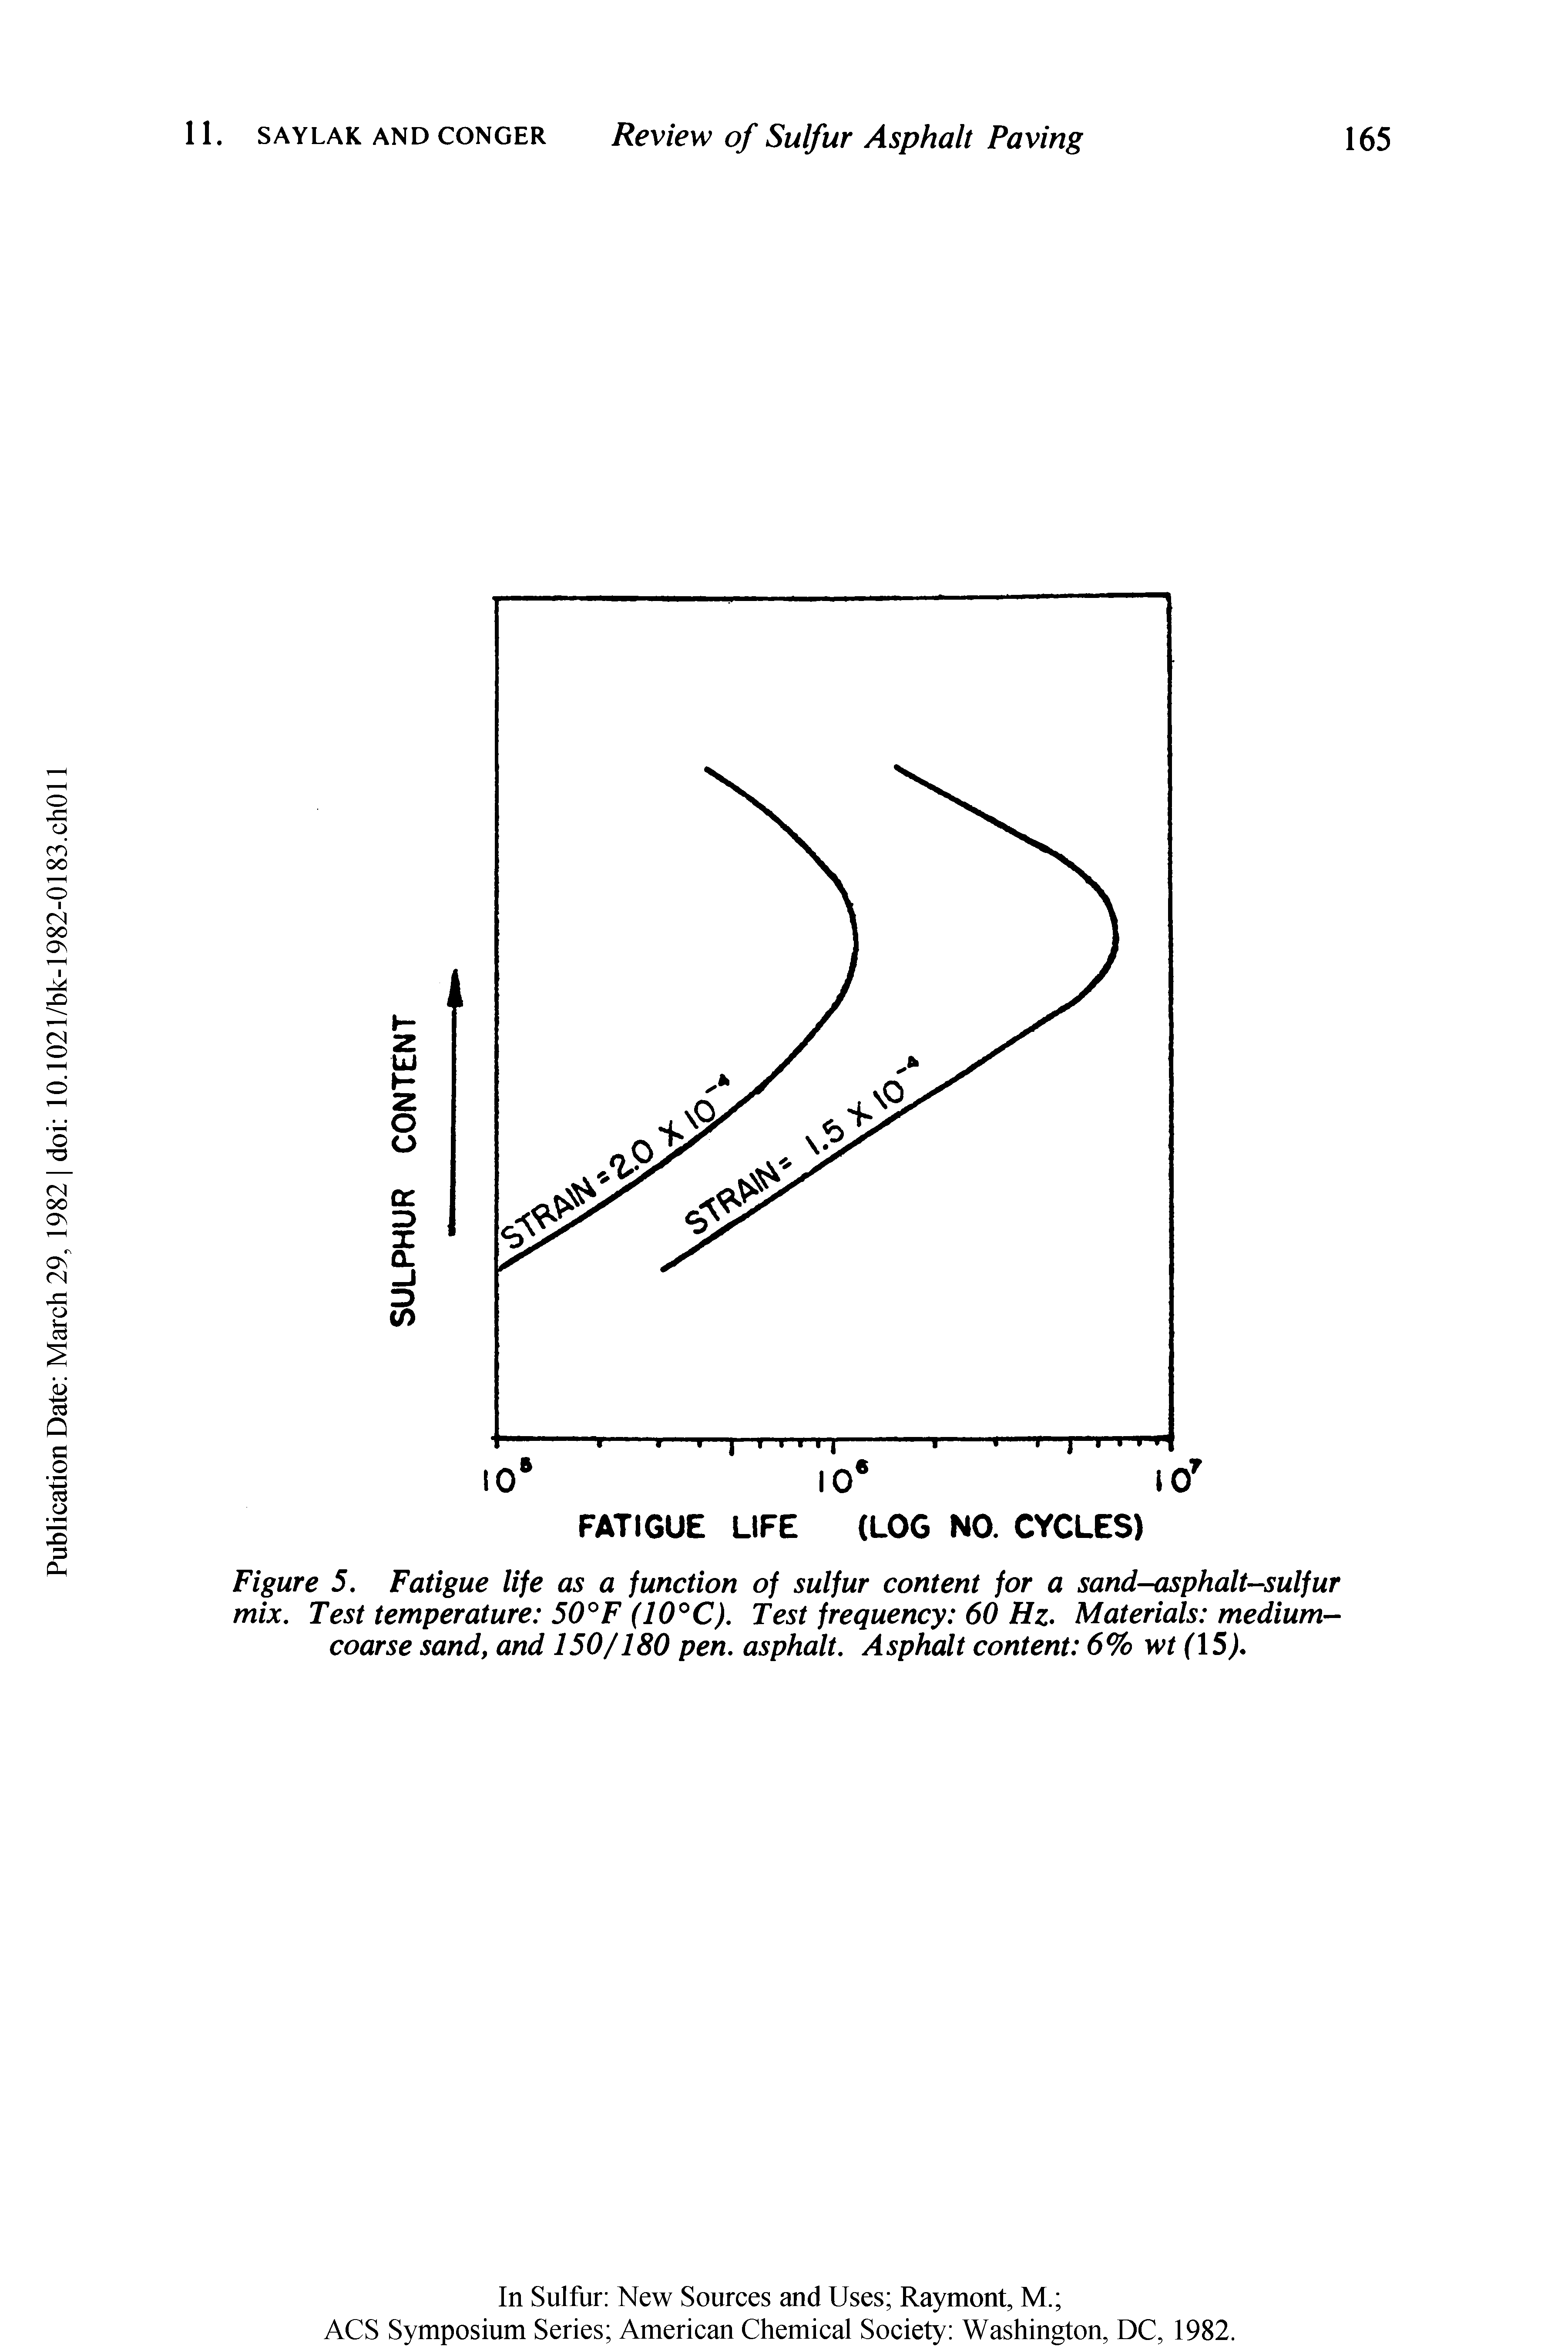 Figure 5. Fatigue life as a function of sulfur content for a sand-asphalt-sulfur mix. Test temperature 50°F (10°C). Test frequency 60 Hz. Materials medium-coarse sandt and 150/180 pen. asphalt. Asphalt content 6% wt (15),...